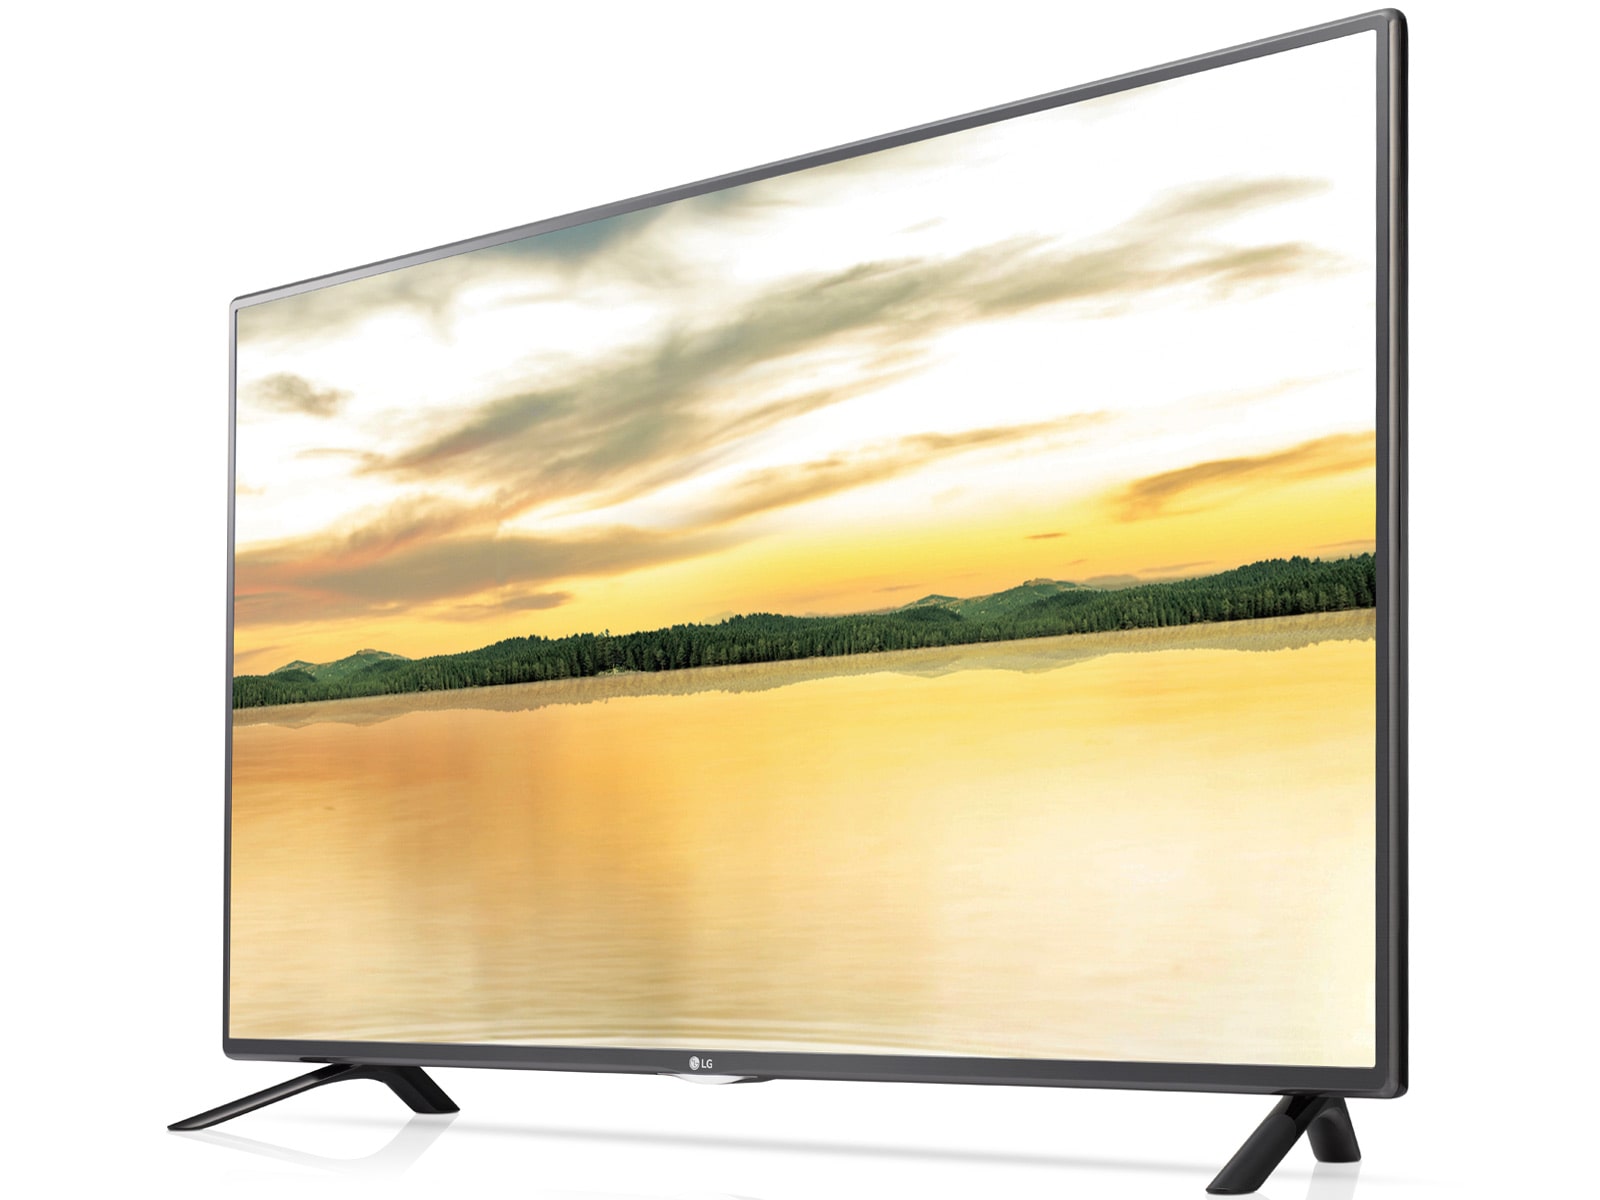 Телевизор lg 32 см. LG 32lf580v. Телевизор LG 32lf580v 32" (2015). Телевизор LG 42lf580v. Телевизор LG 32lf560v.